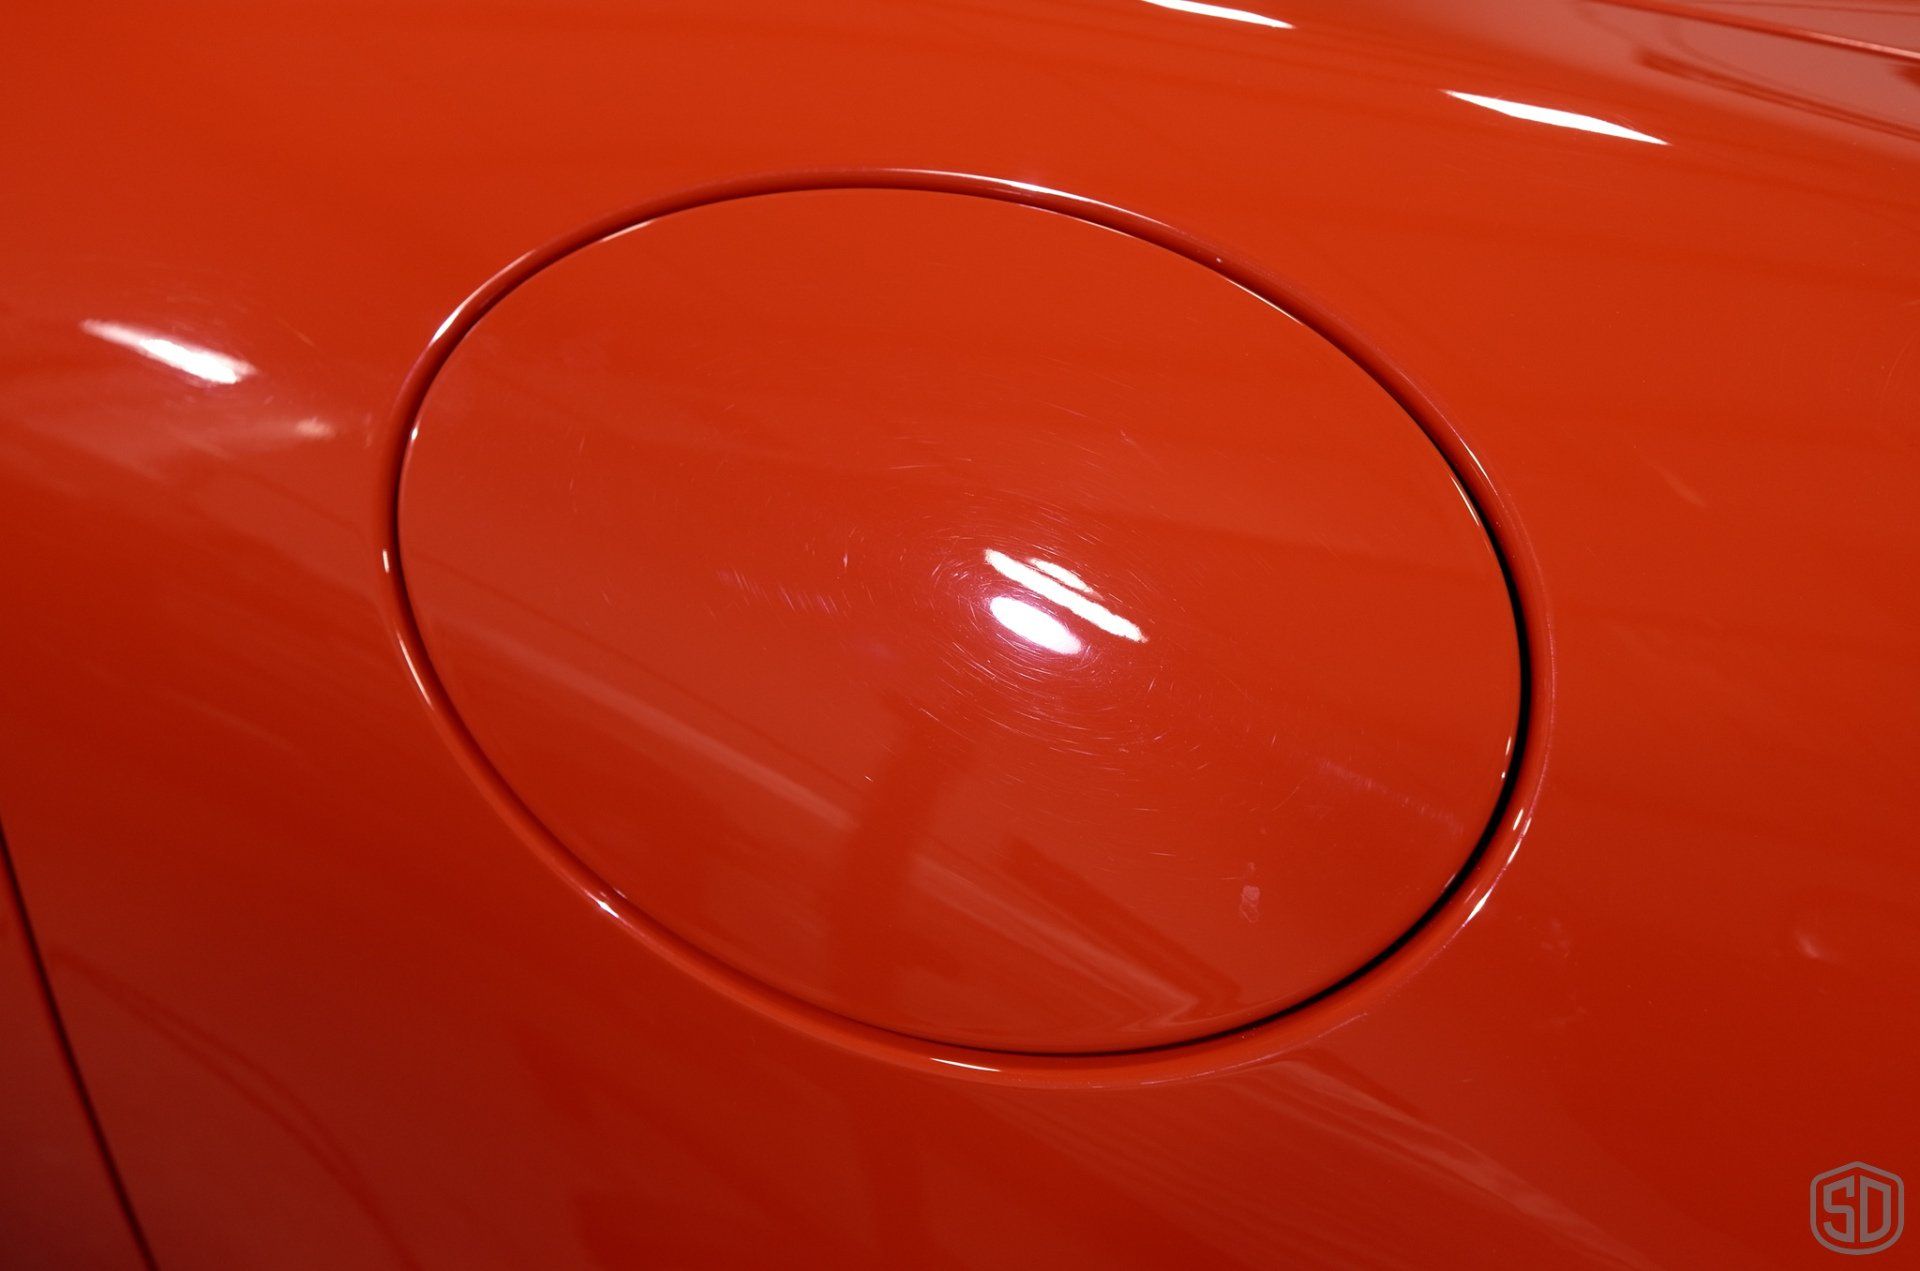 2016 Porsche  911 GTS Detailing, Paint Correction, Paint Chip Repair, Nano-Titanium Glass Coating, Paint Protection Film after Orlando, Florida